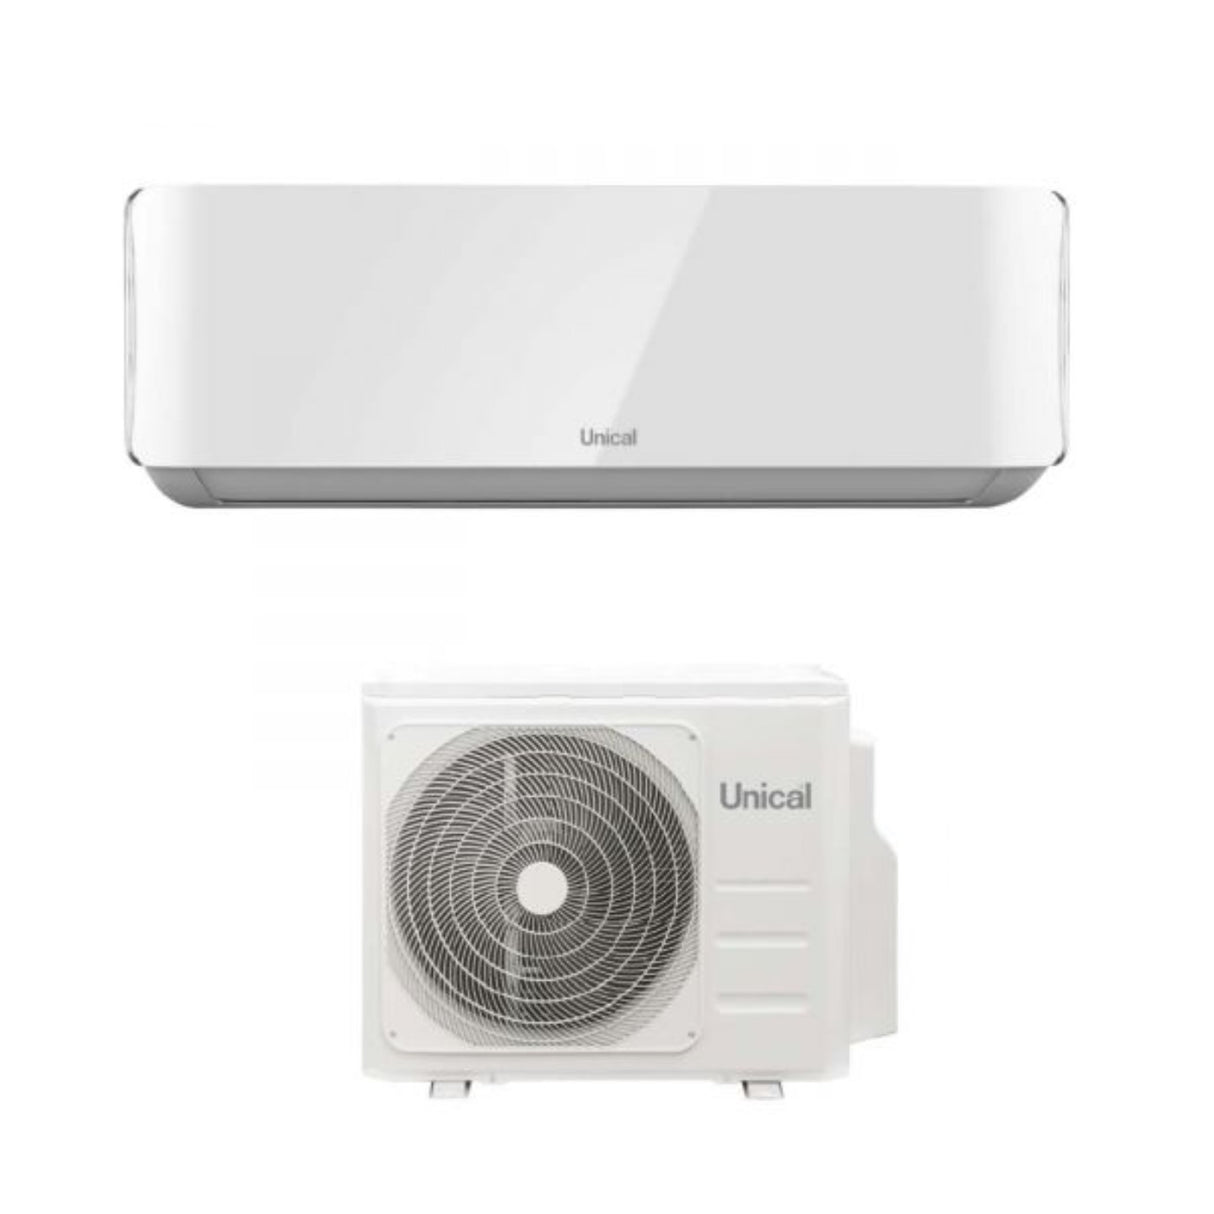 immagine-1-unical-climatizzatore-condizionatore-unical-inverter-mono-split-serie-air-cristal-10000-btu-kmun-10h-r-32-wi-fi-optional-ean-8059657000736